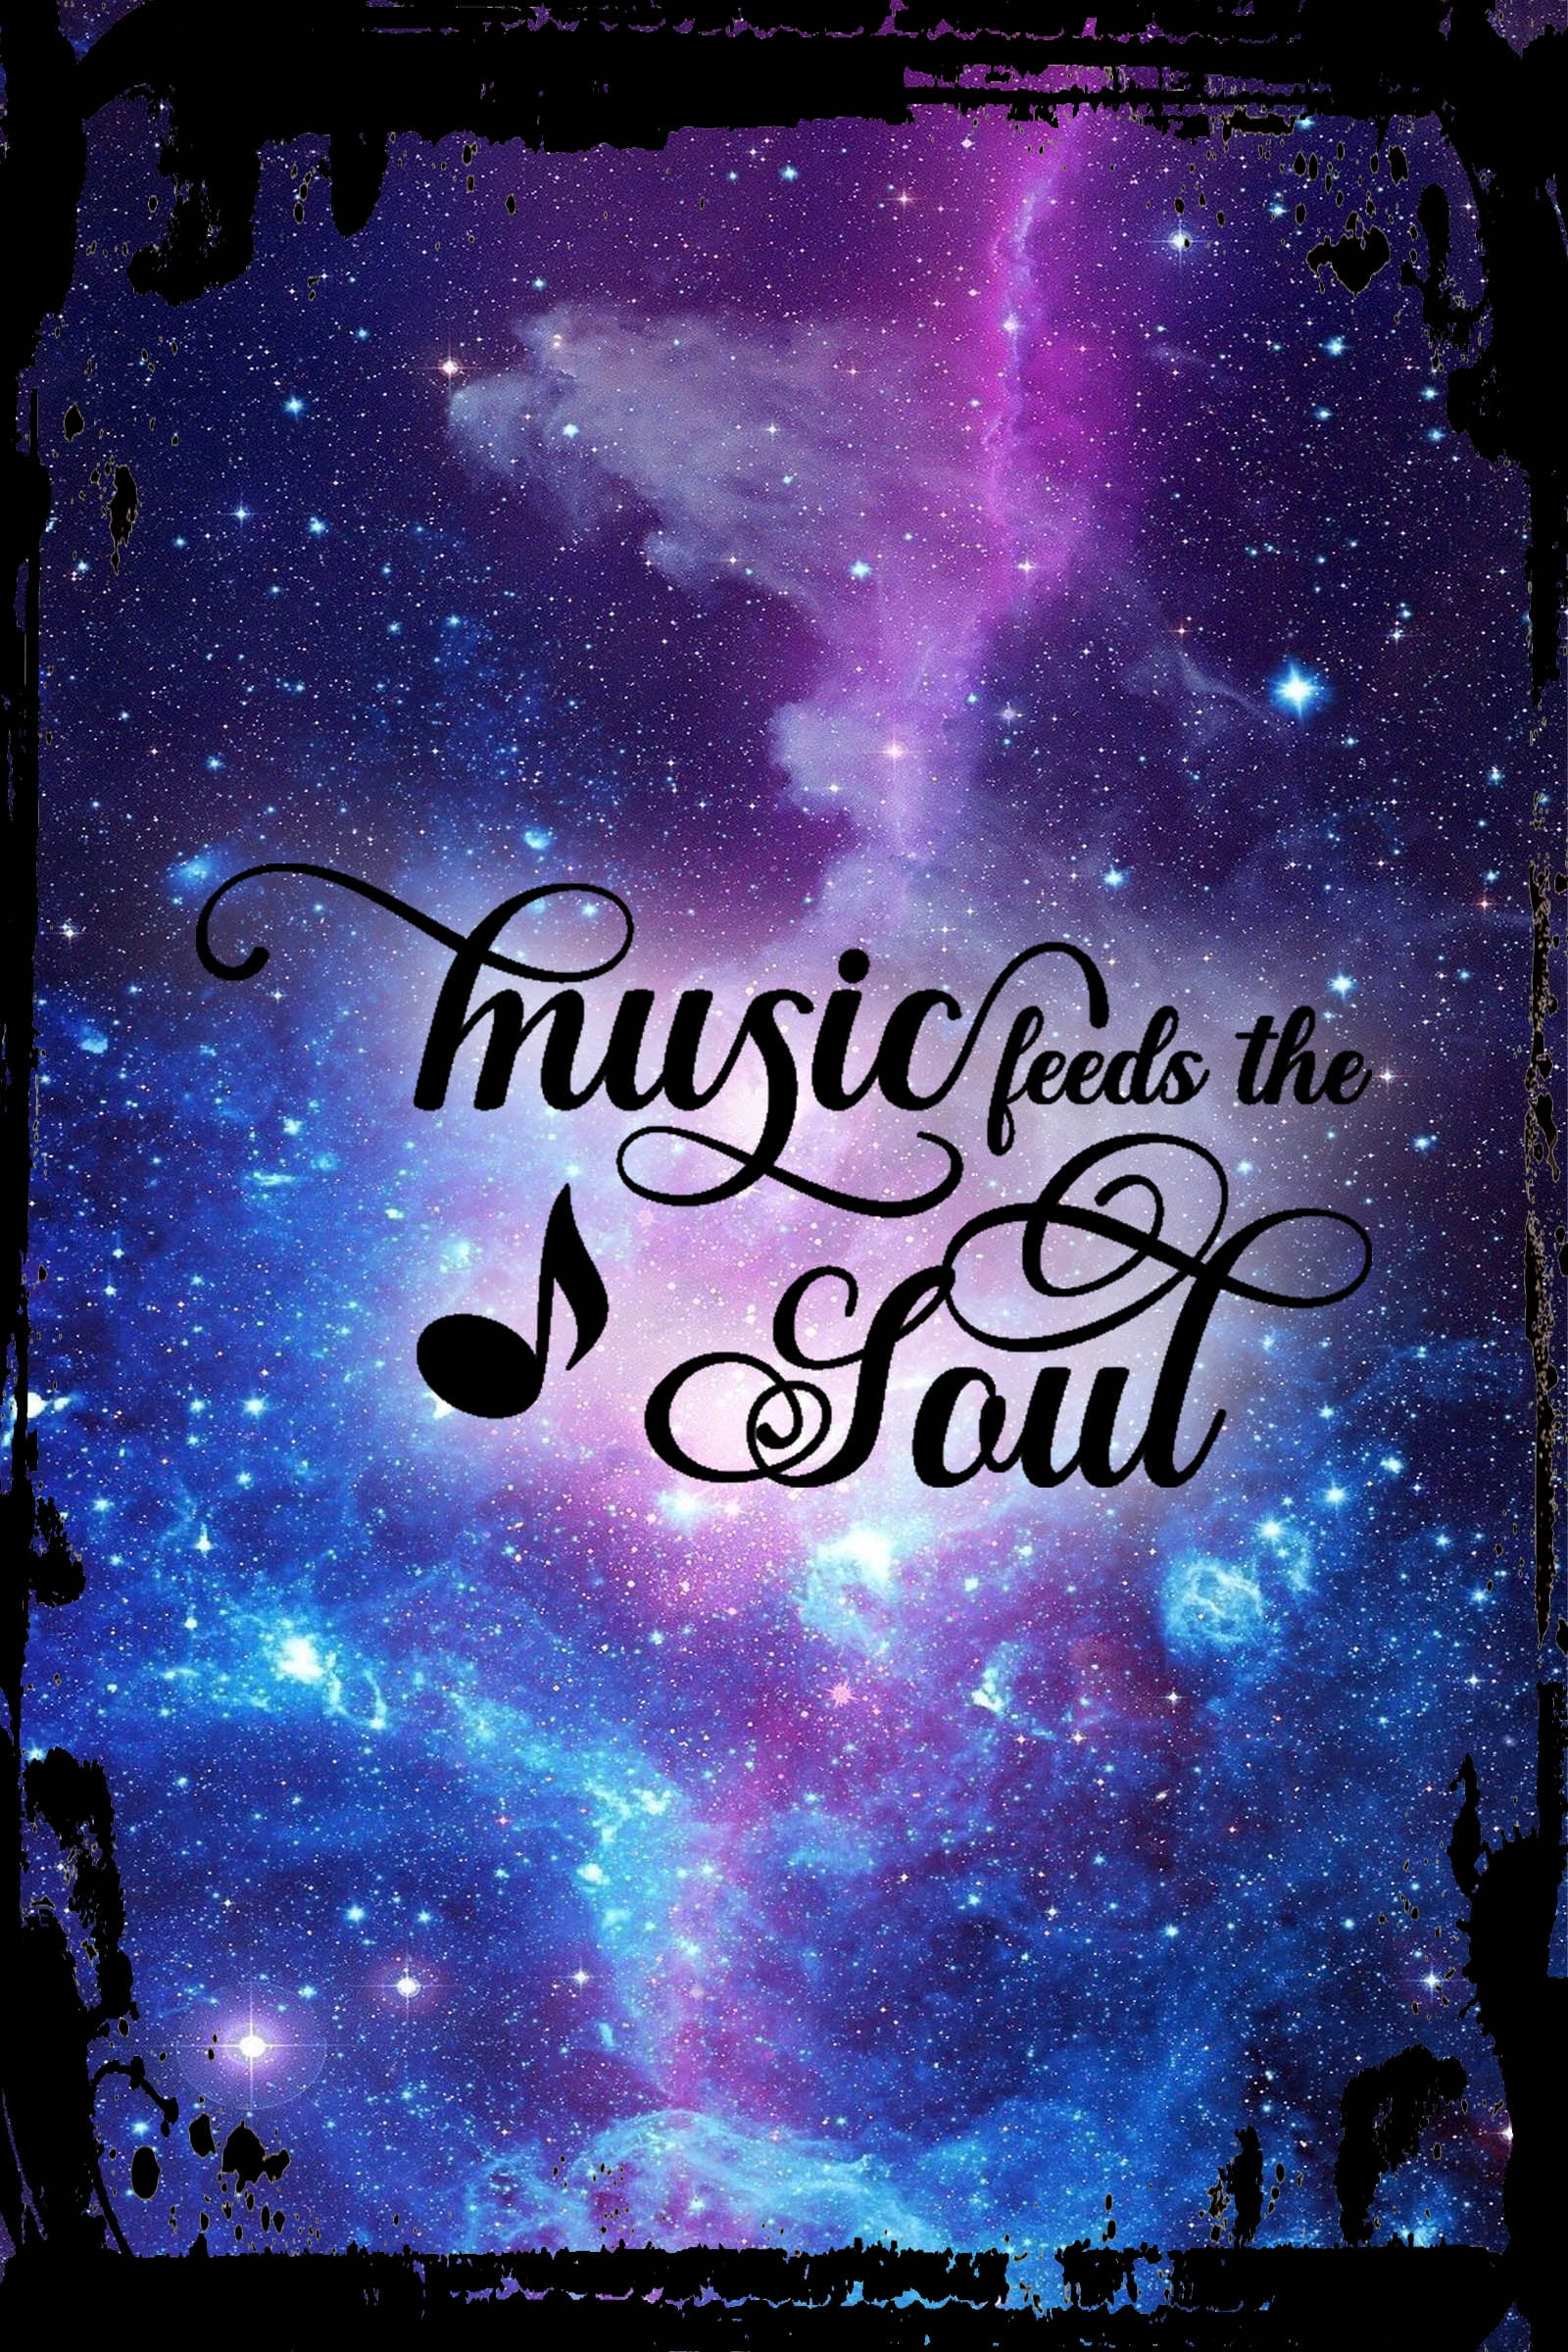 The Soul Galaxy